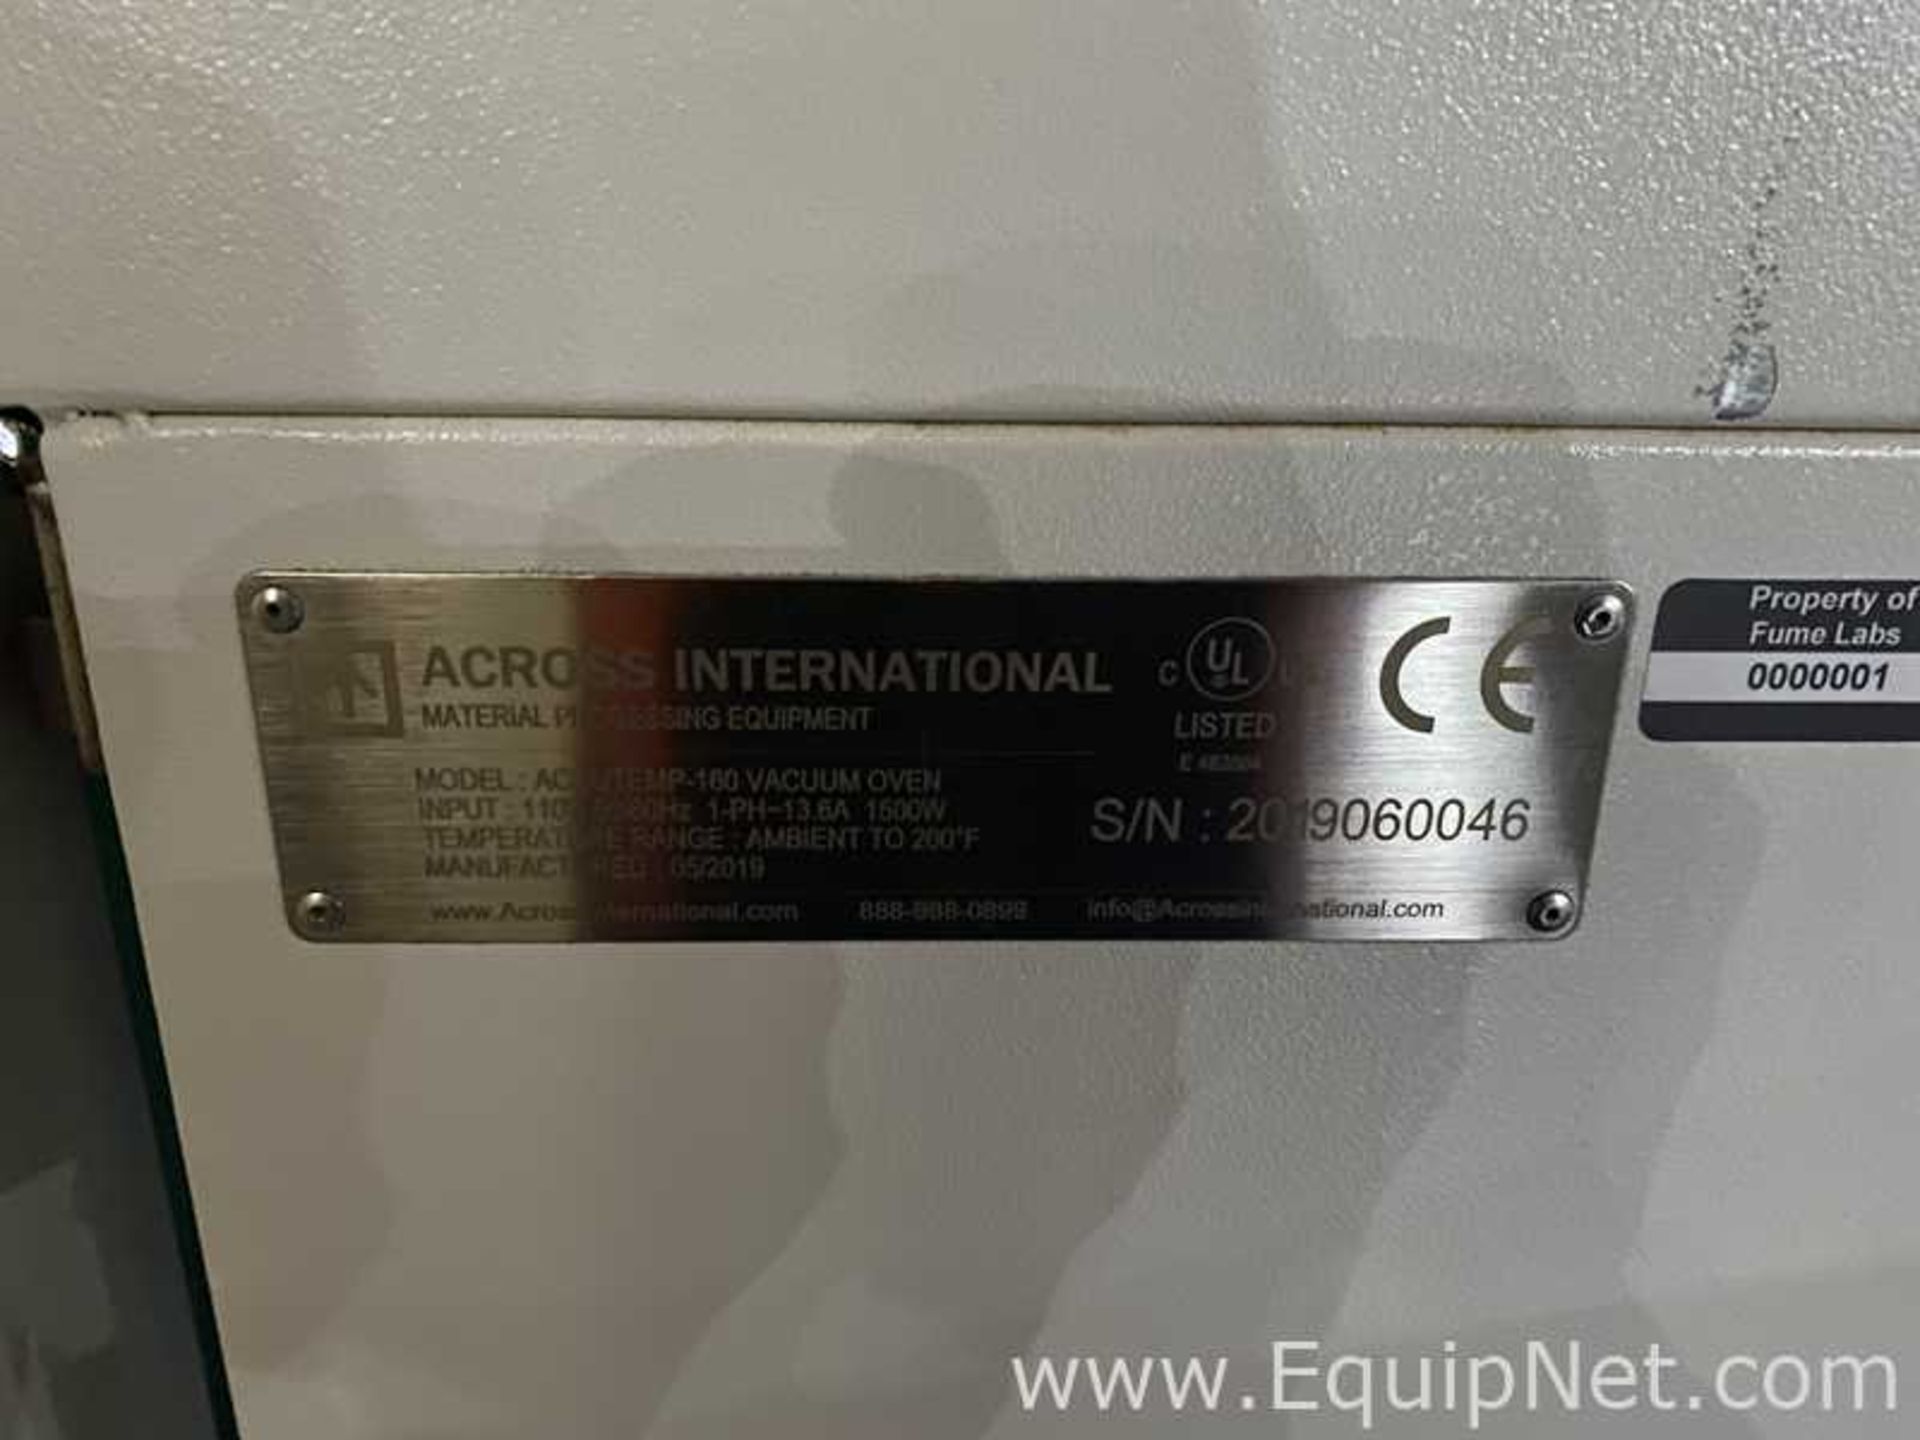 Across International Vacuum Oven AccuTemp-160 Vacuum Oven - Image 6 of 7